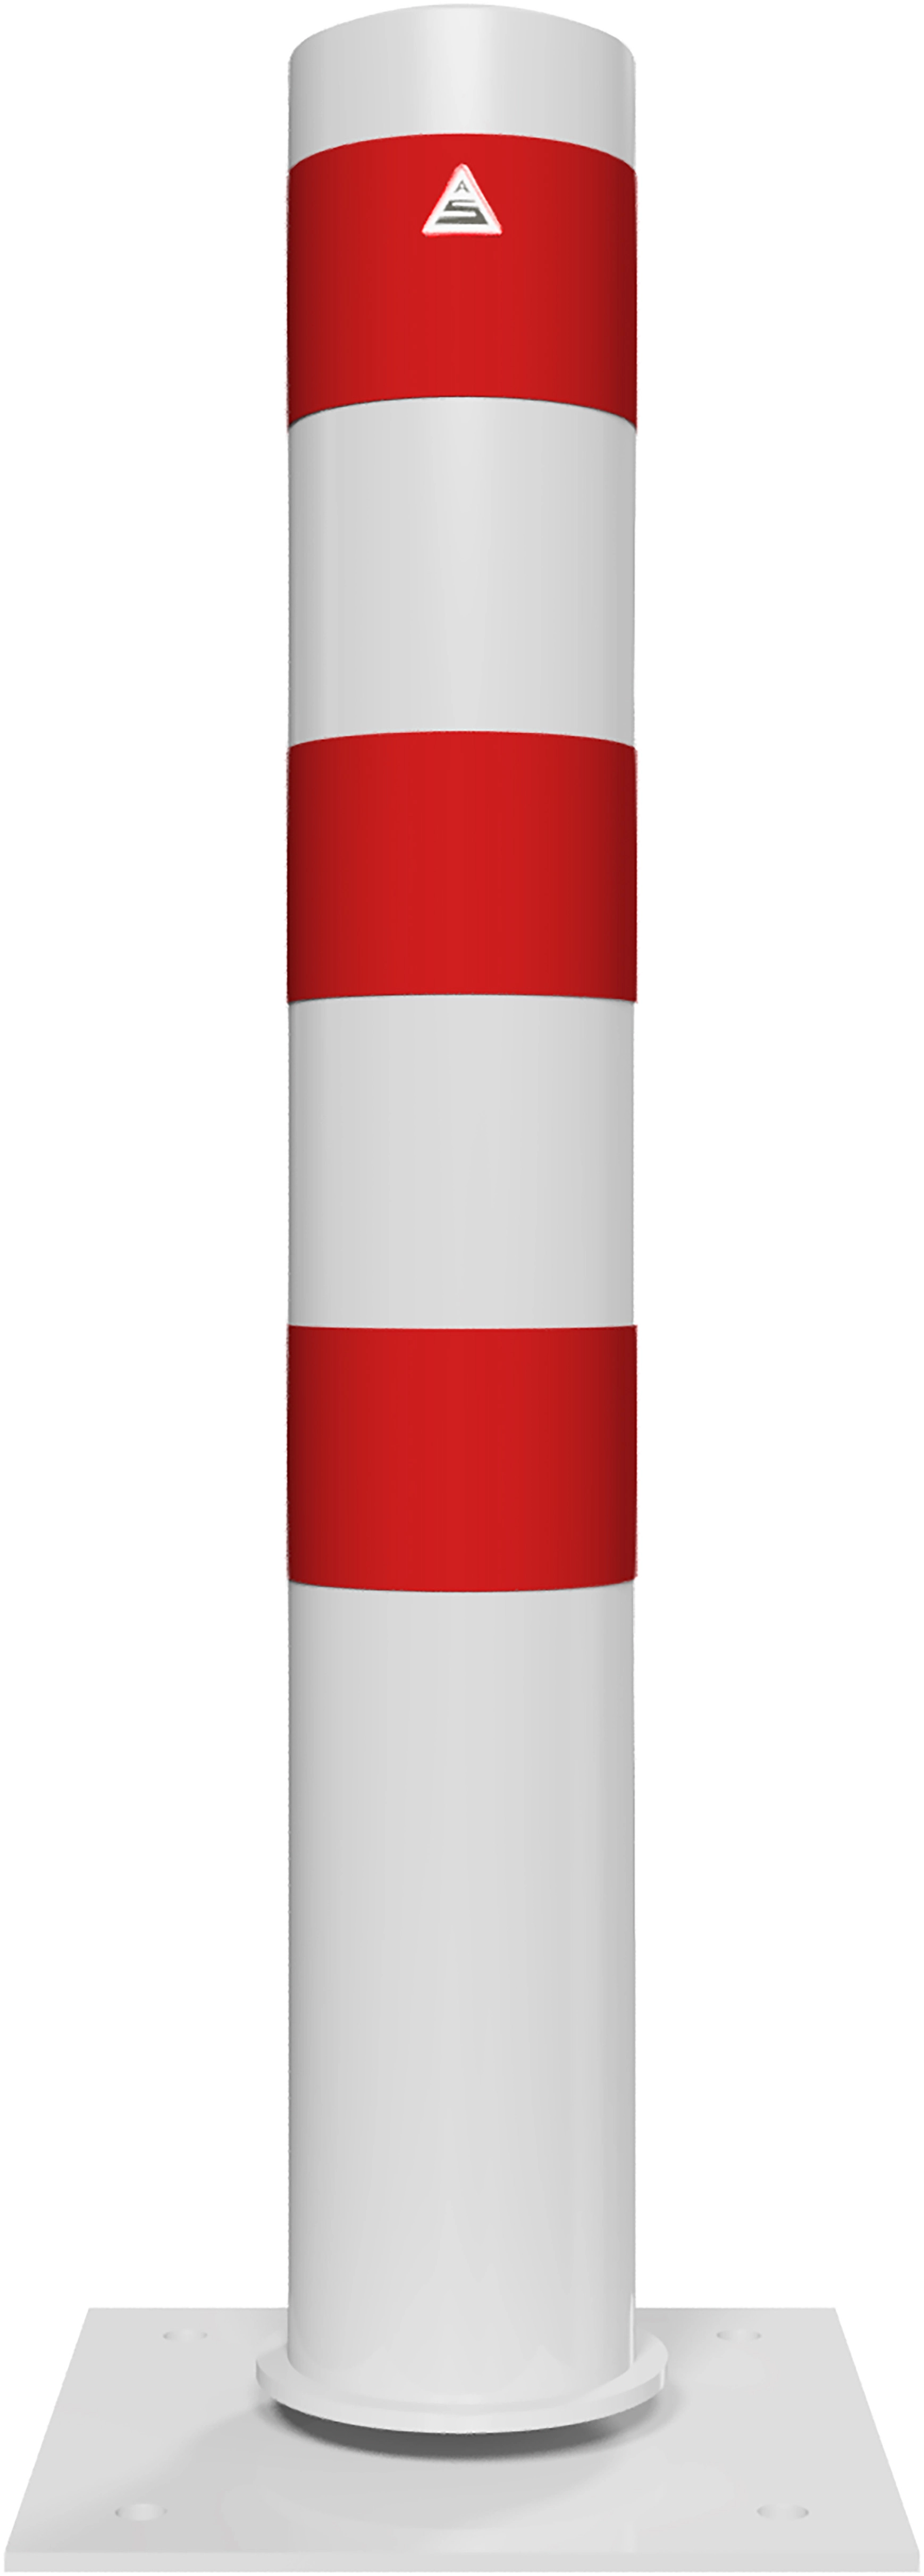 Parkeerpalen - rampaal-rood-wit-152mm-kantelbaar-1000mm